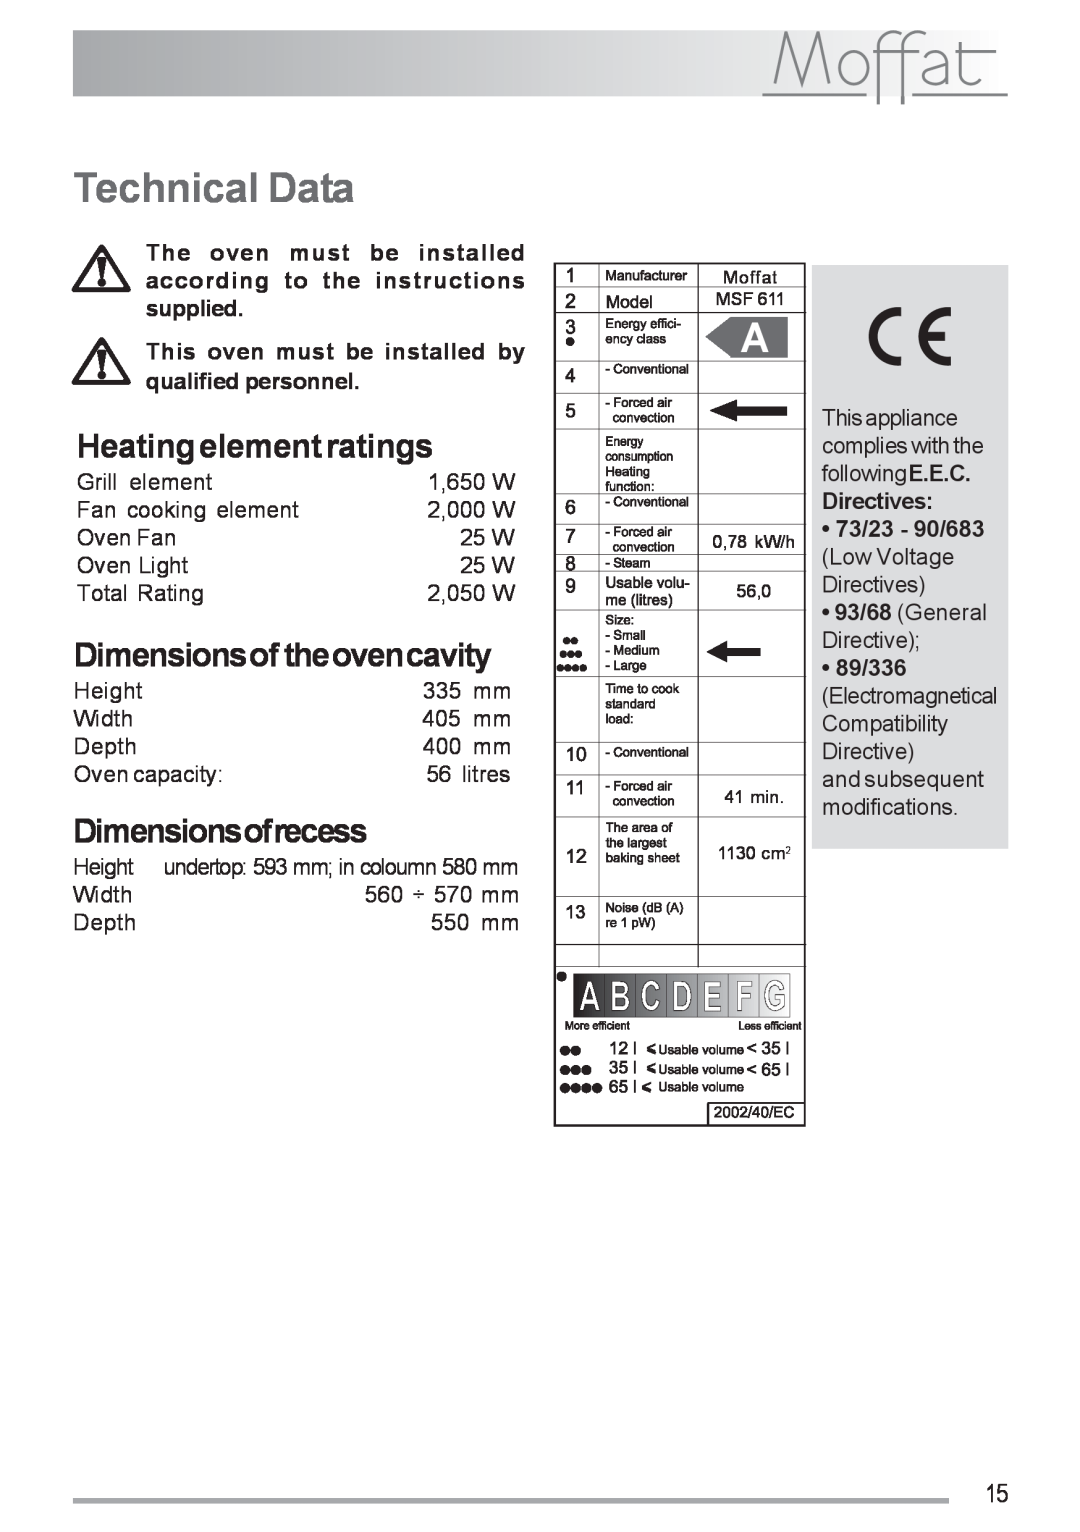 Moffat MSF 611 manual Technical Data, Heatingelementratings, Dimensionsoftheovencavity, Dimensionsofrecess, 89/336 